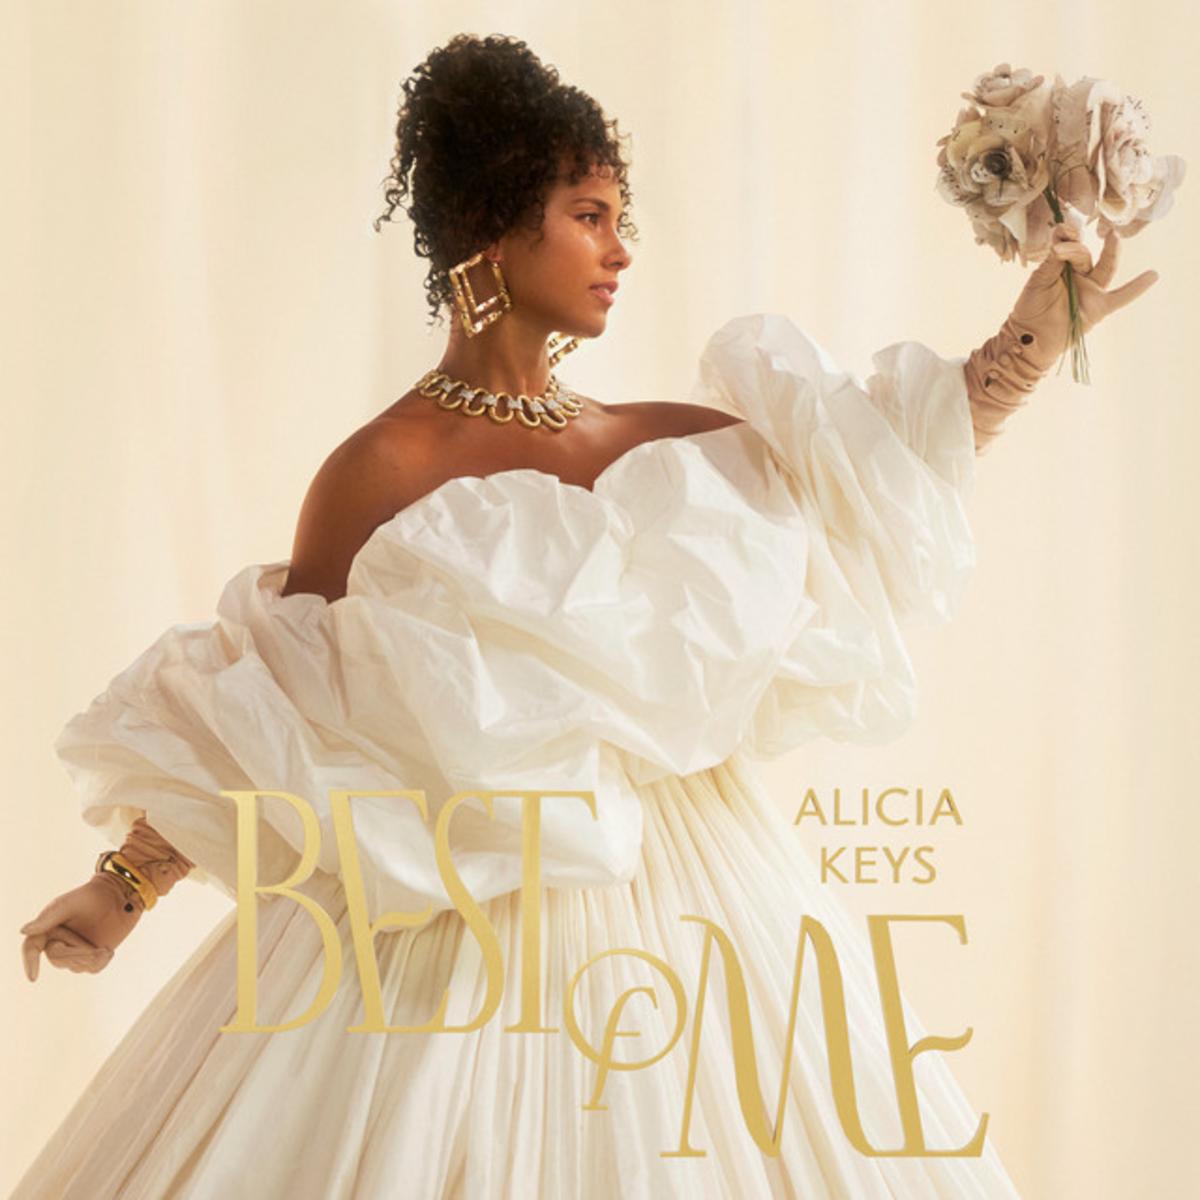 DOWNLOAD MP3: Alicia Keys - Best of Me